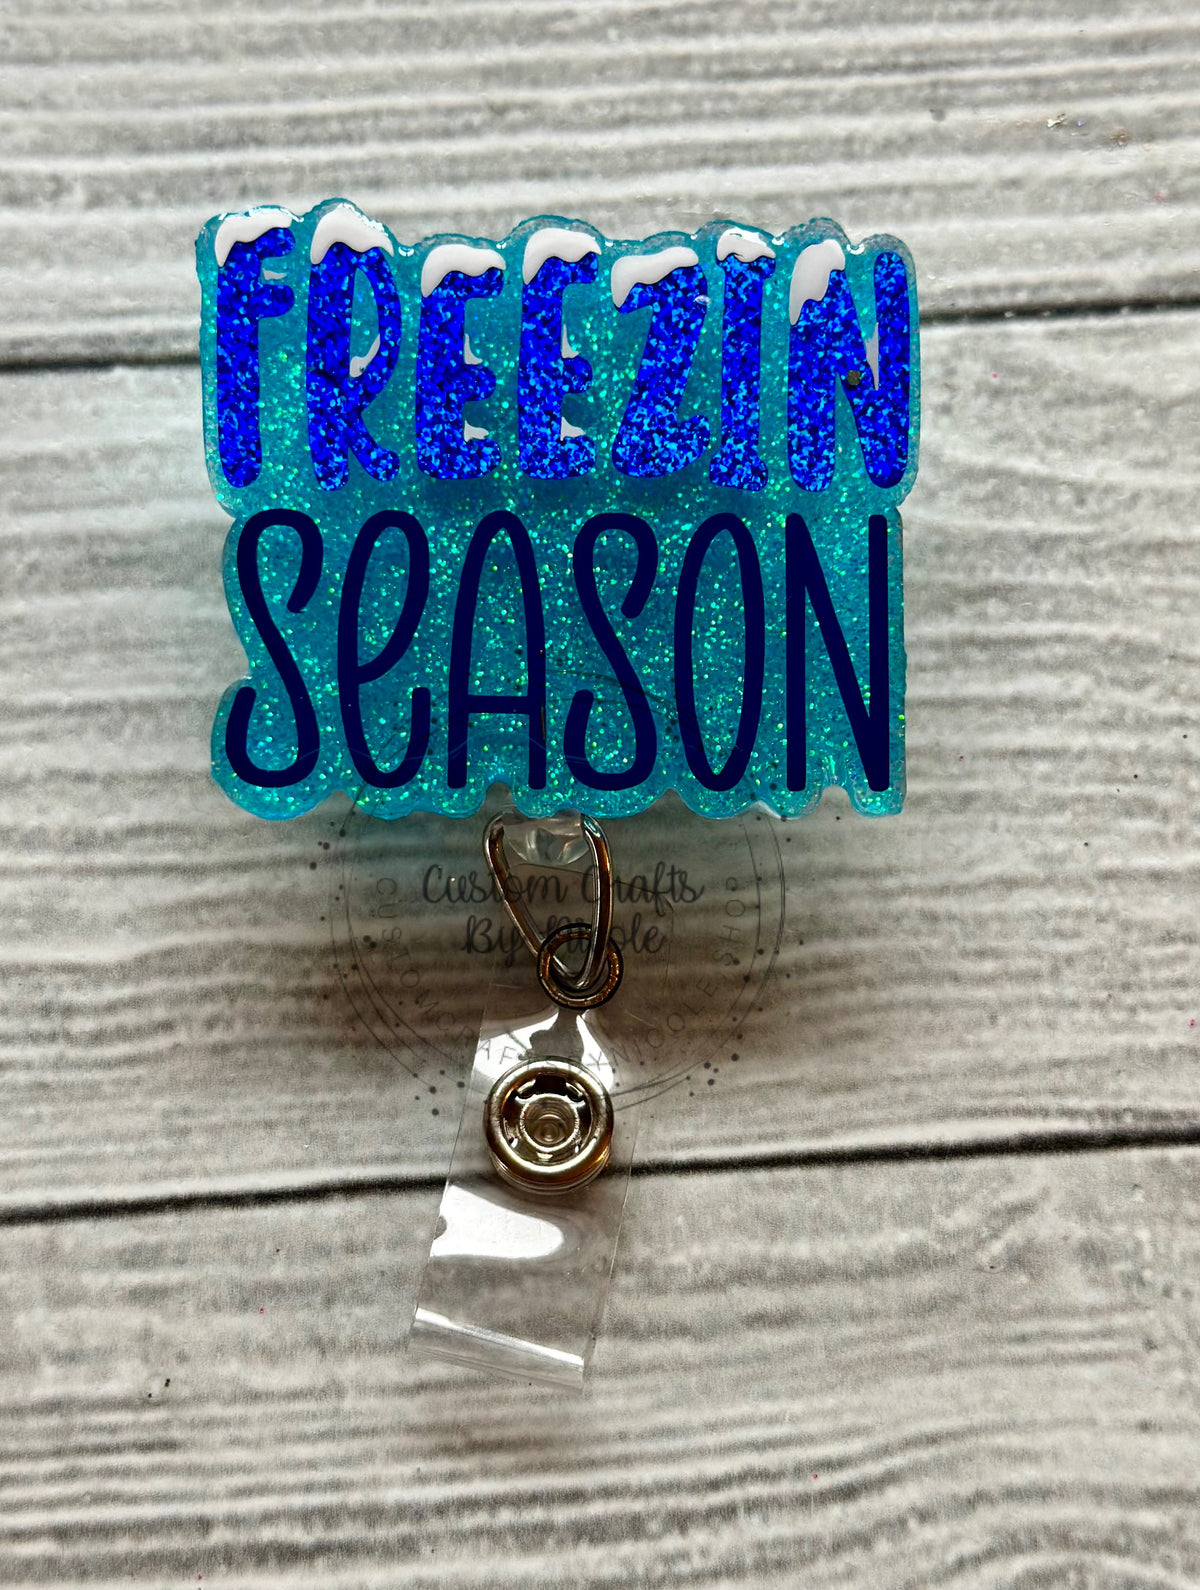 Freezin season